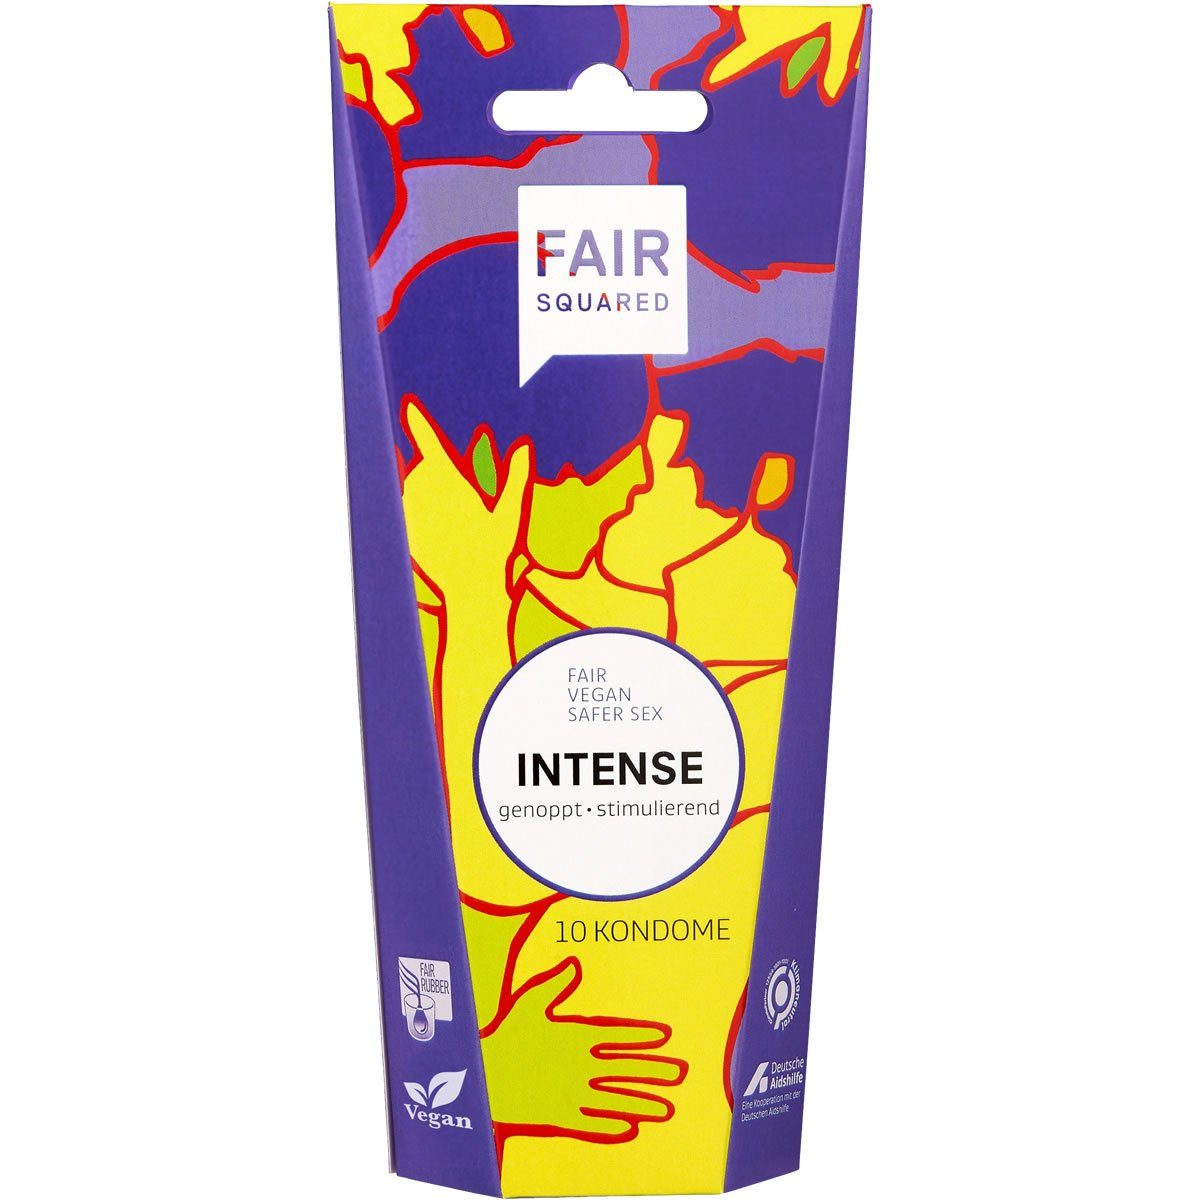 Fair Squared Kondome Celebrate your Love - Intense Packung mit, 10 St., vegane und stimulierende Fair-Trade-Kondome